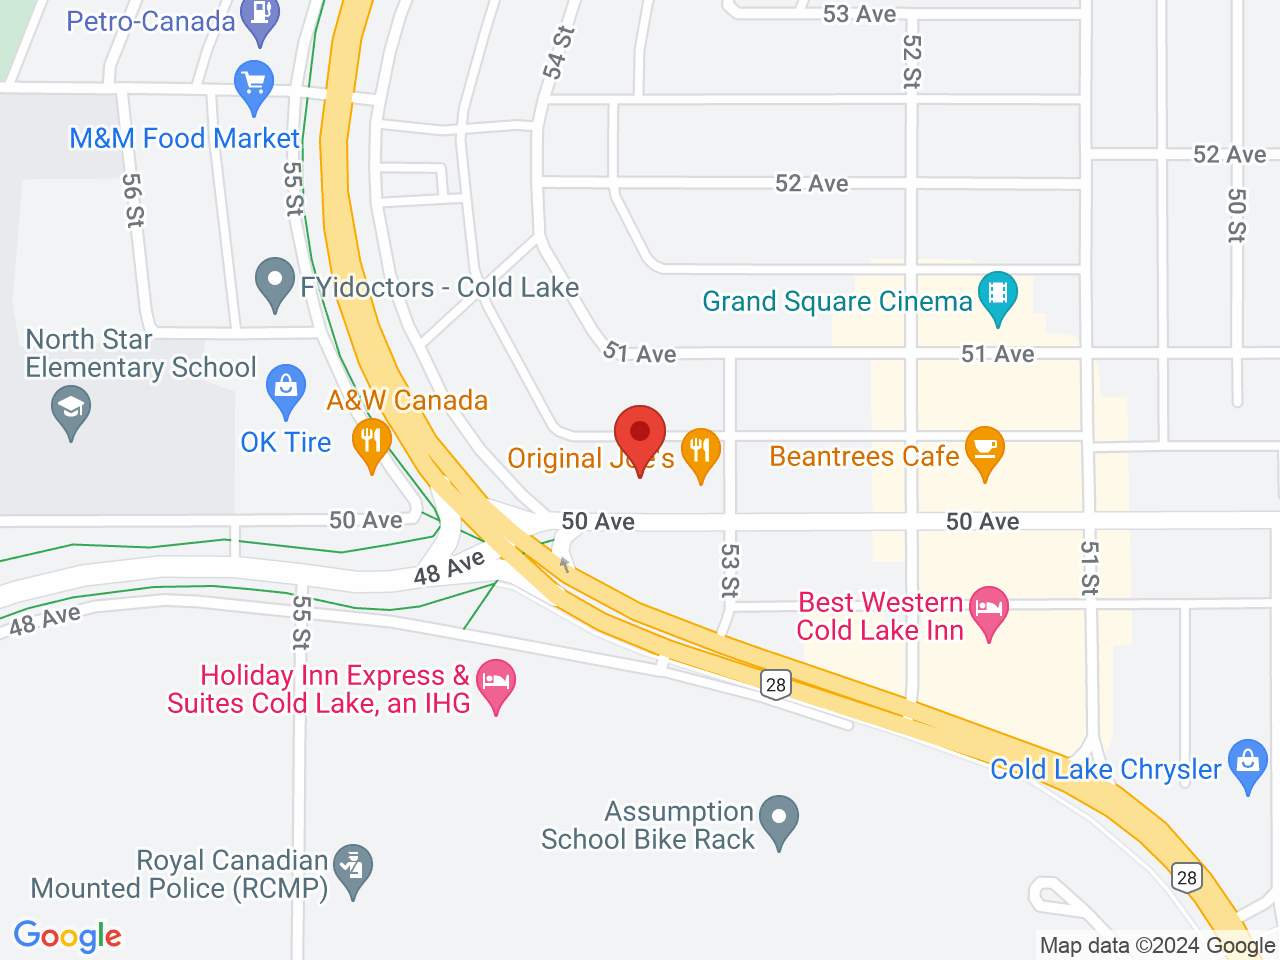 Street map for Canna Cabana, 5308 50 Ave., Cold Lake AB